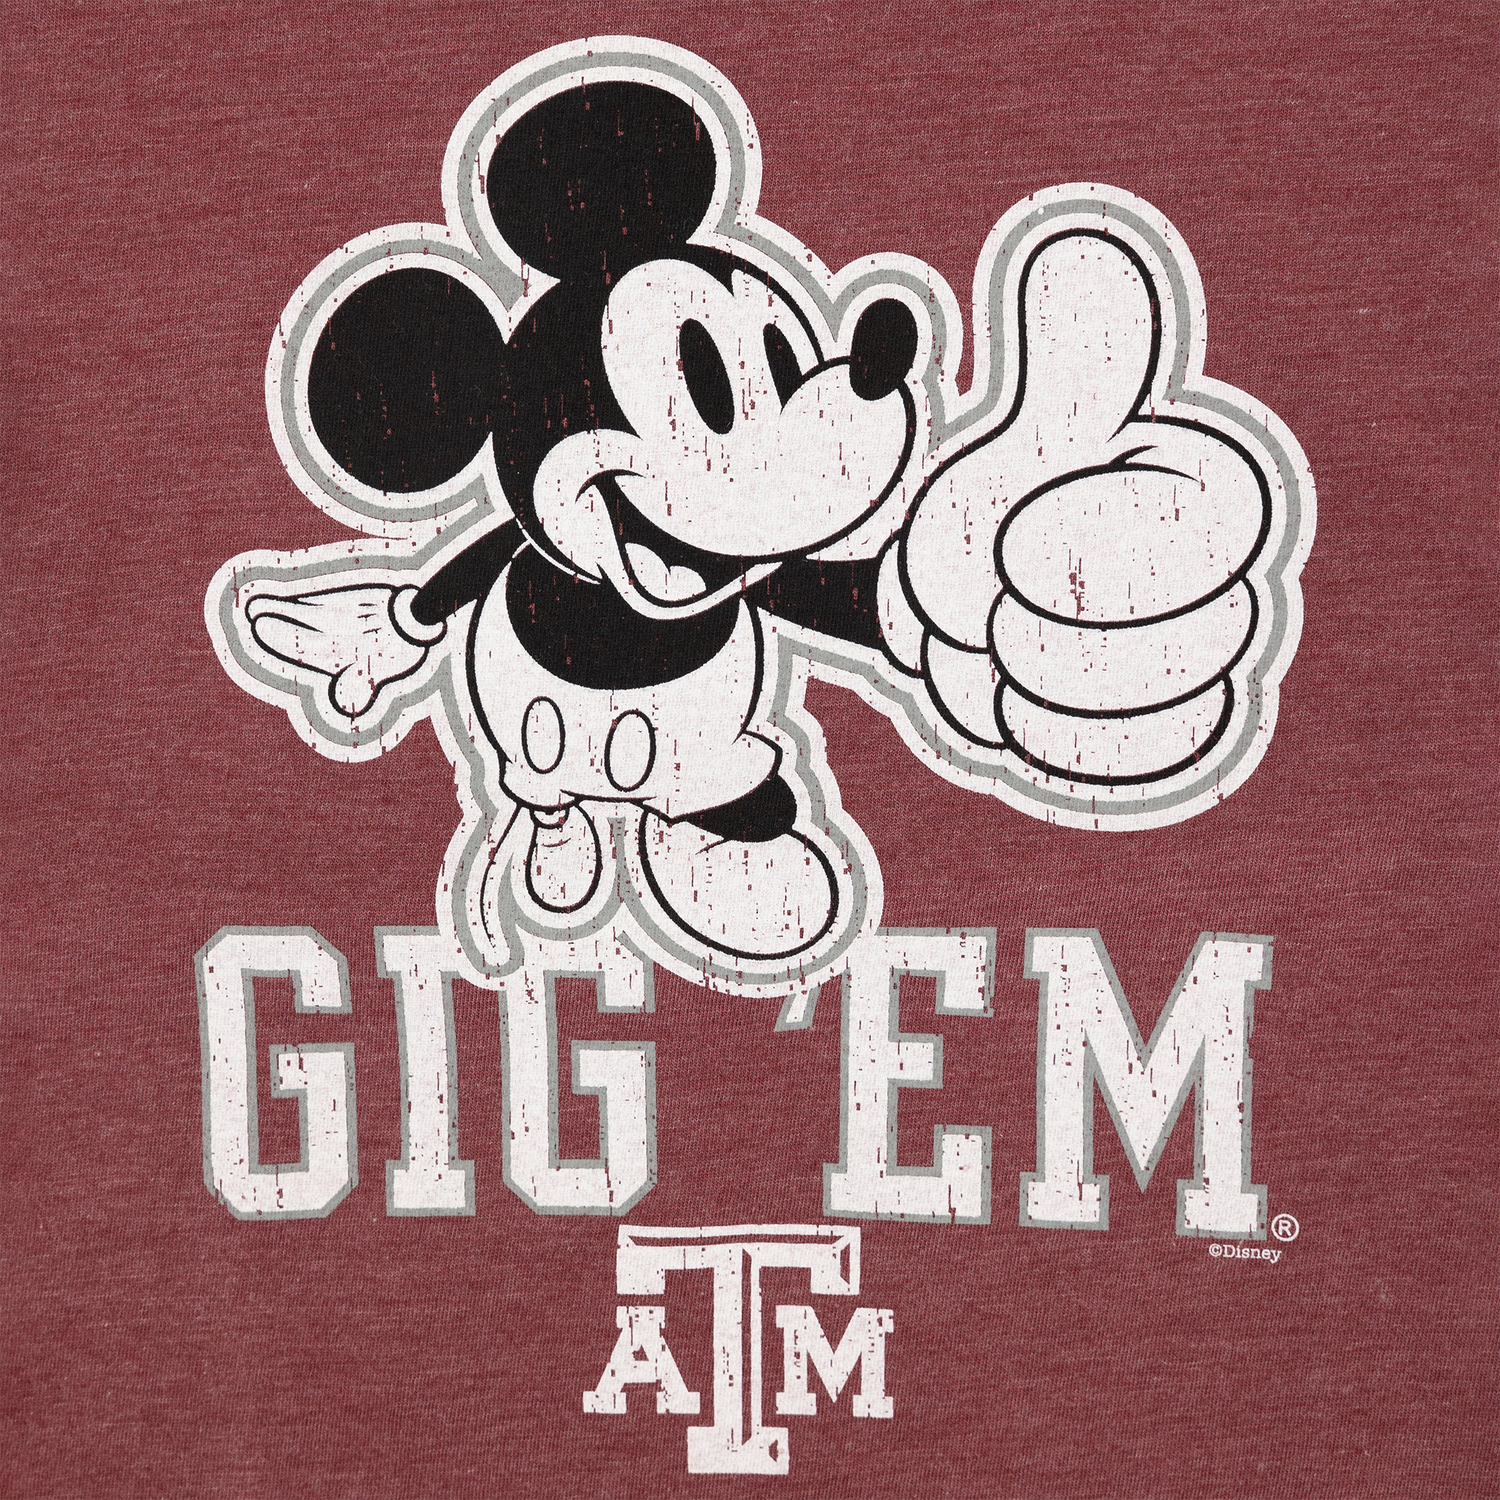 Texas A&M Mickey Gig 'Em T-Shirt